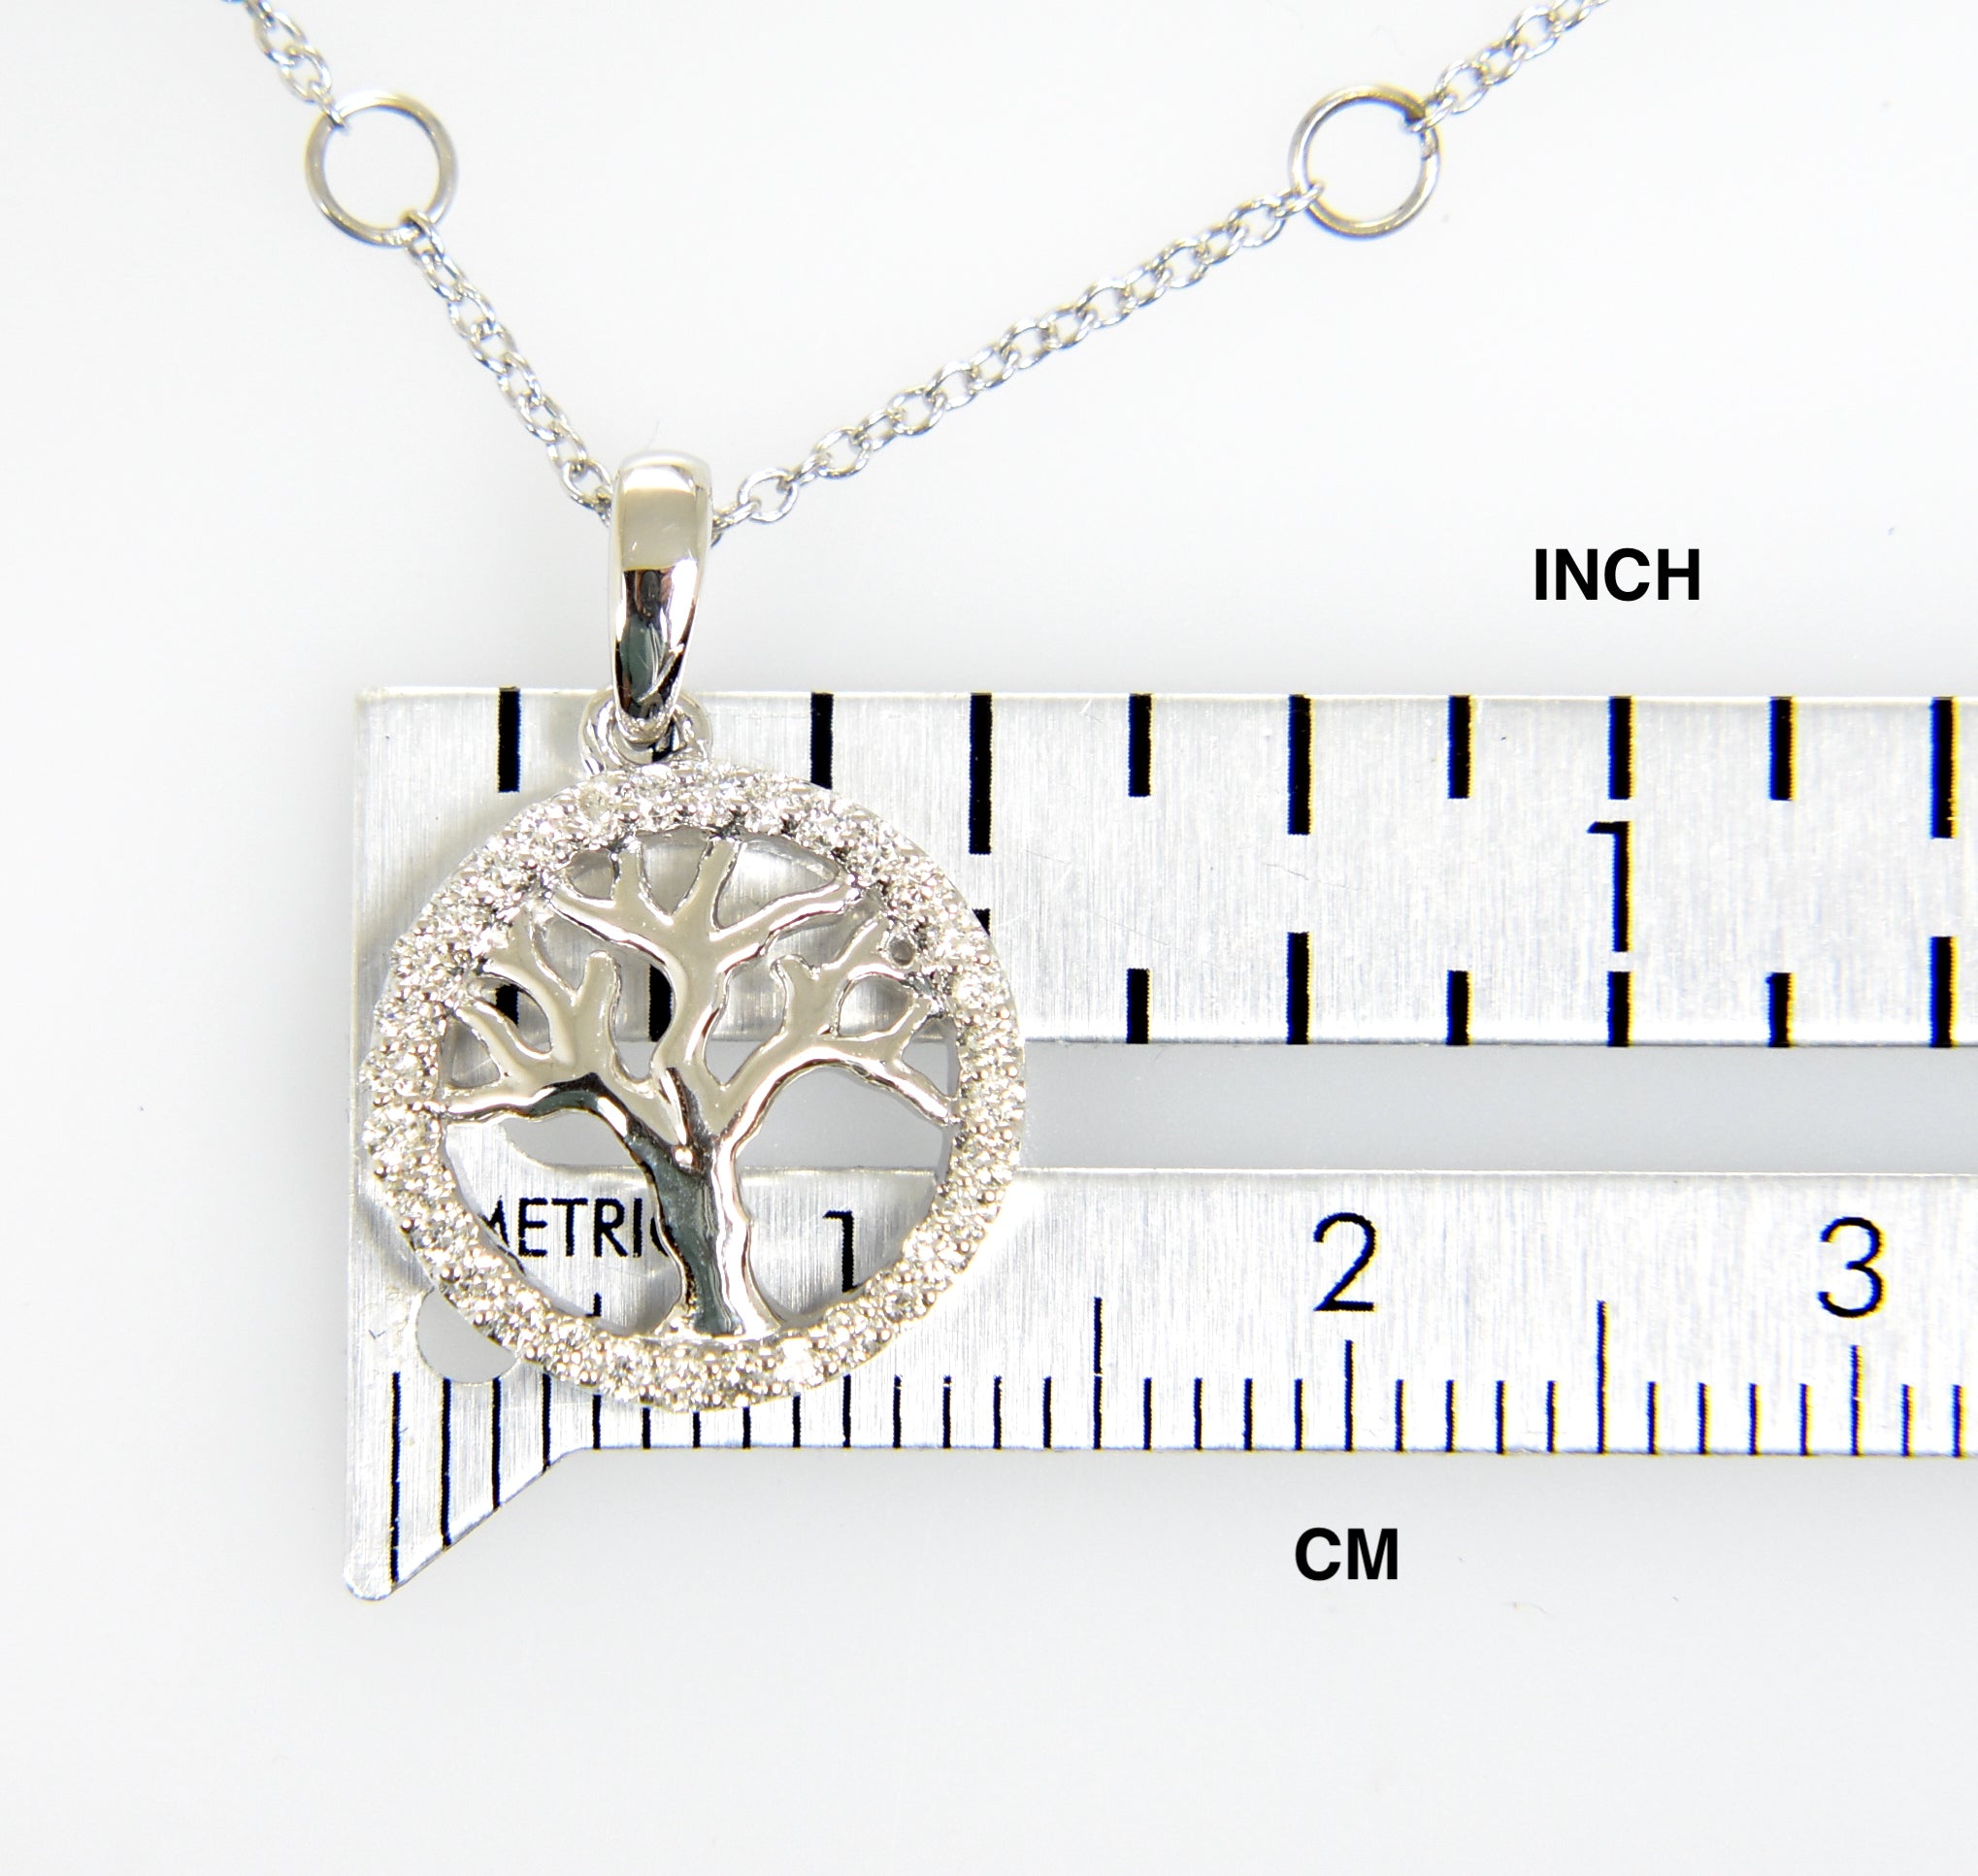 14K White Gold 1/5 CTW Diamond Tree of Life Pendant Charm Necklace